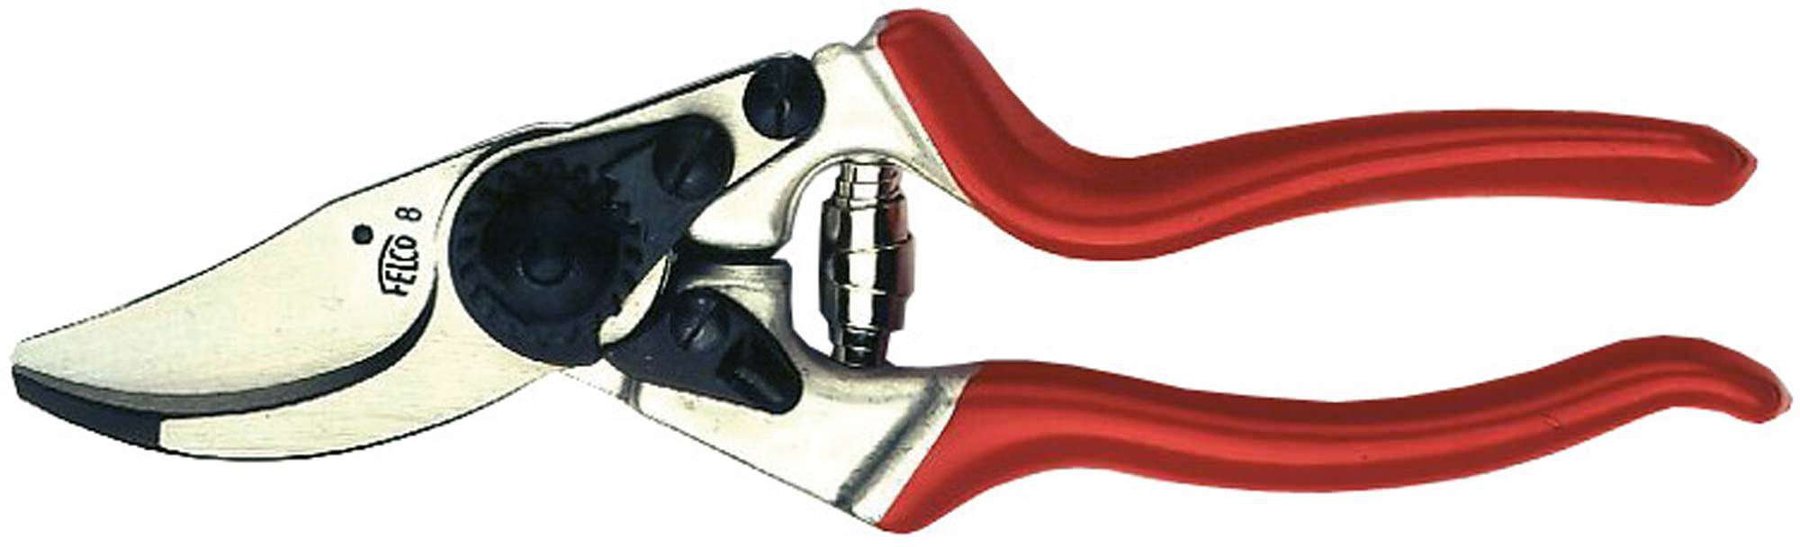 Scissor Felco Modell 8 mm 210 Gartengeräte Schneiden 